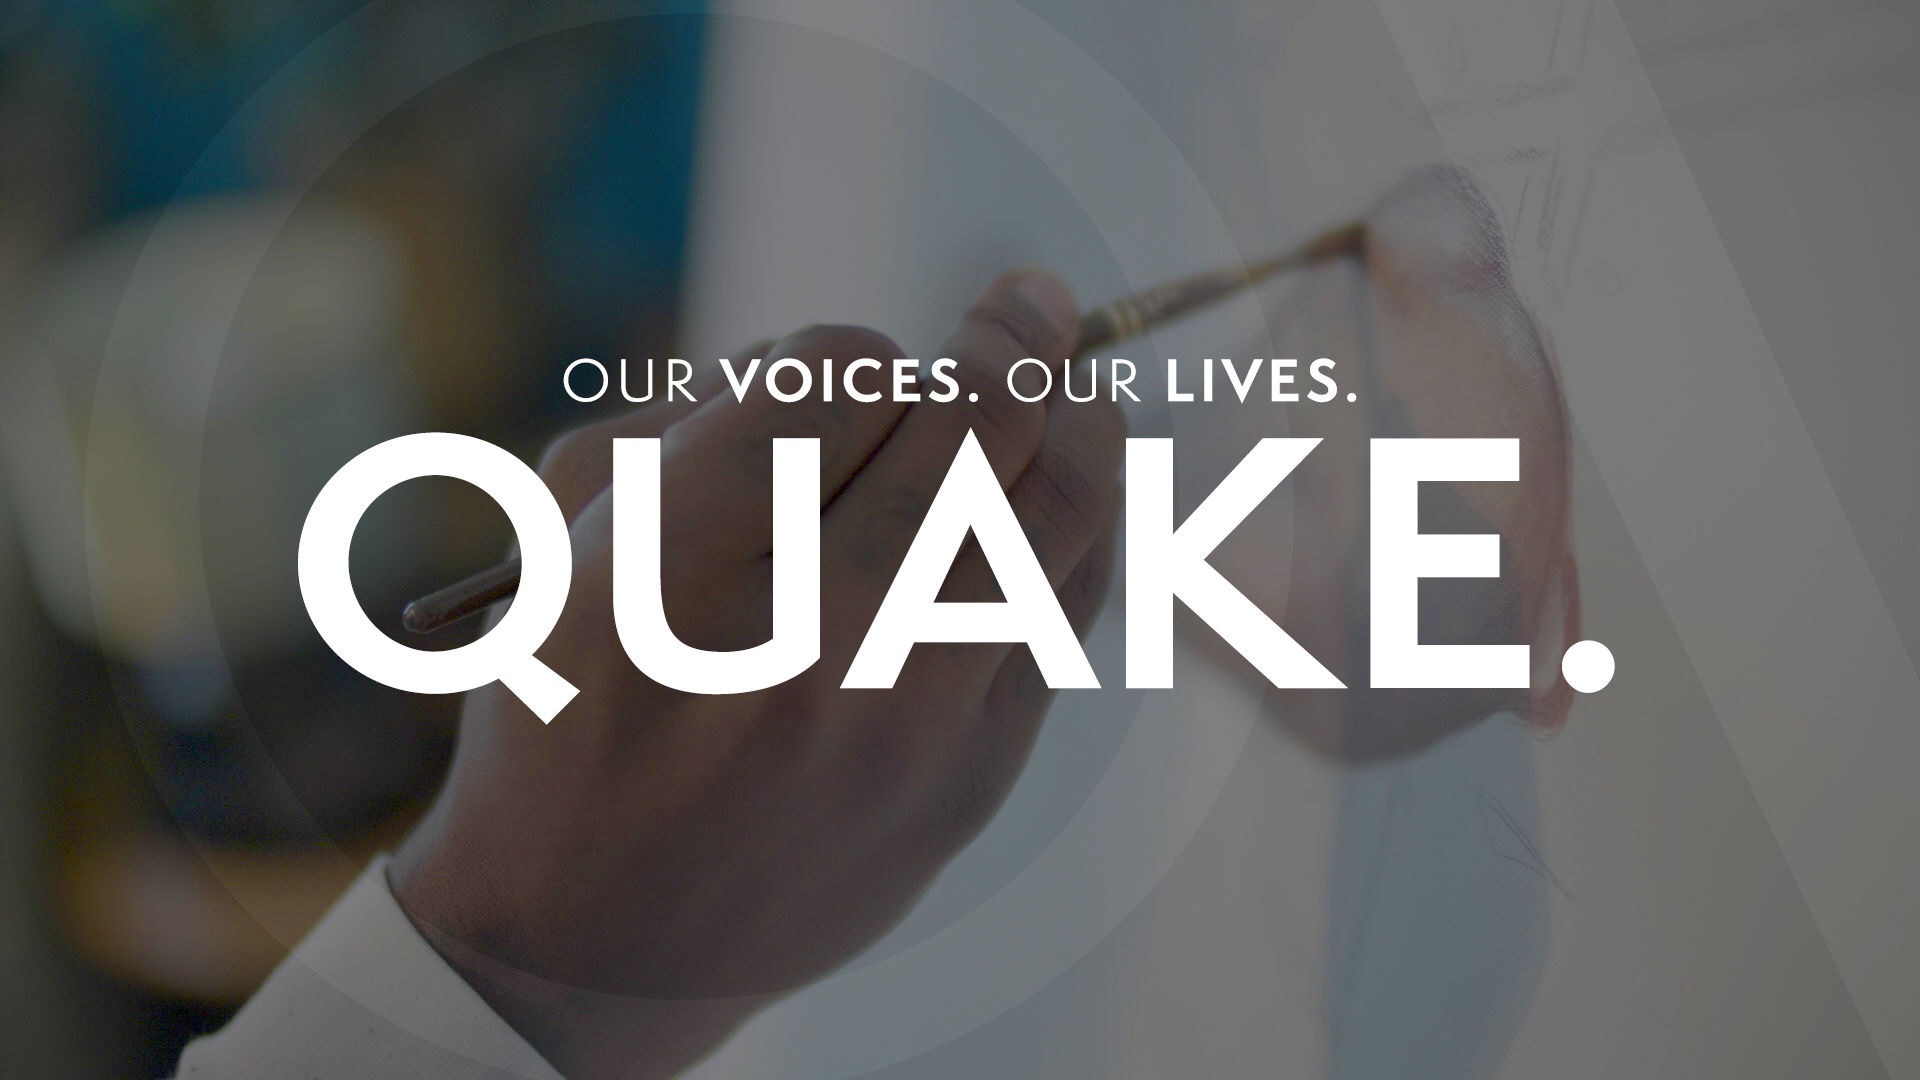 Our Voices. Our Lives. presents QUAKE.